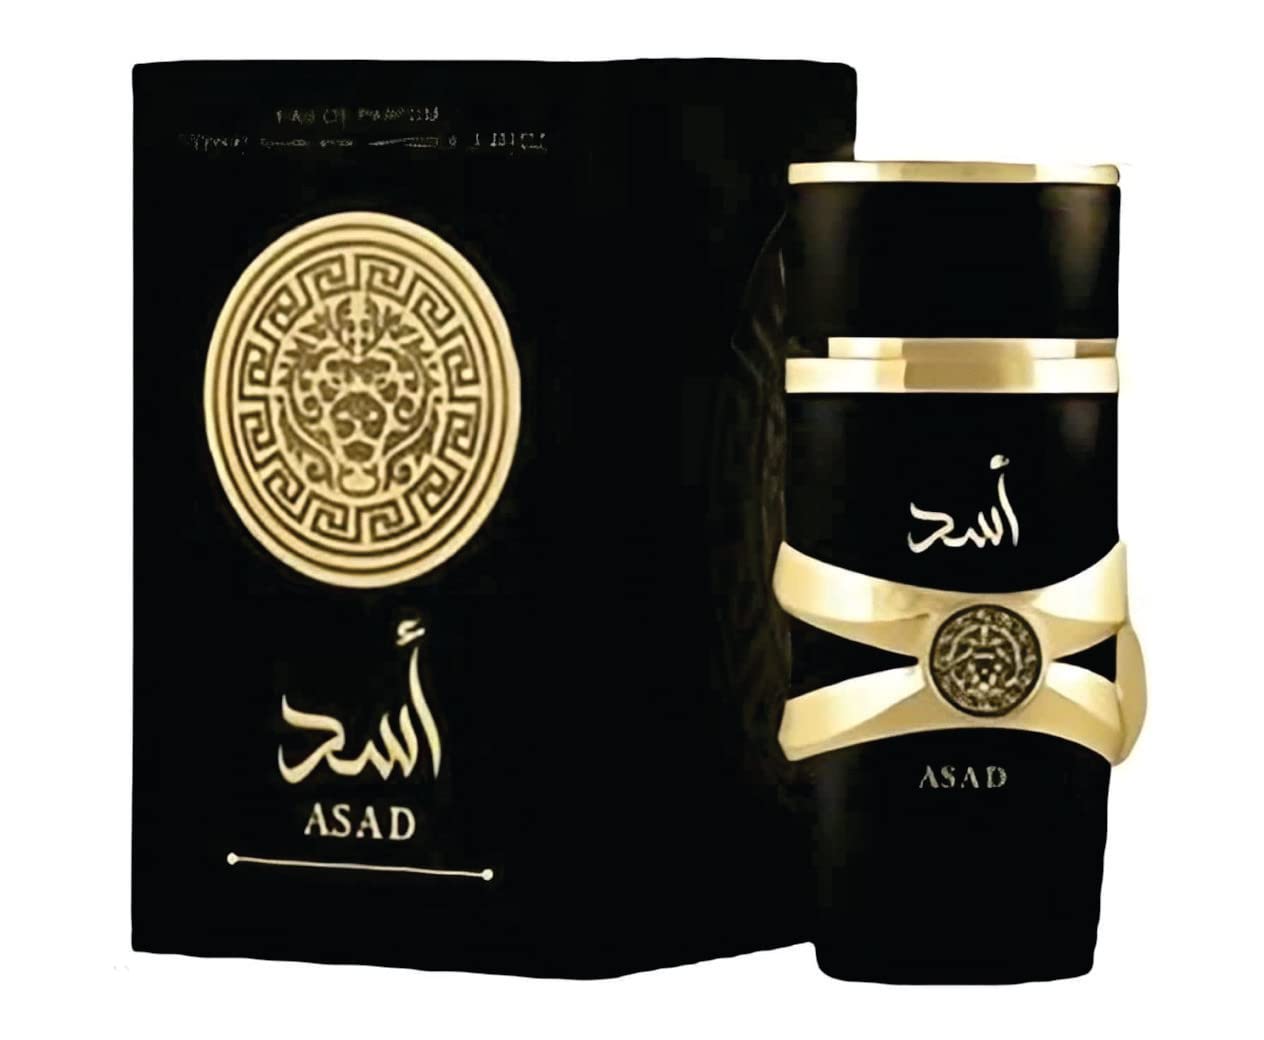 Asad Perfume 100ml, Asad Eau De Parfum EDP Men Perfume, Vanilla, Tobacco and Oud Fragrance Perfume, Asad Arabian Fragrance 100ml Perfume By Sapphire’s Choice